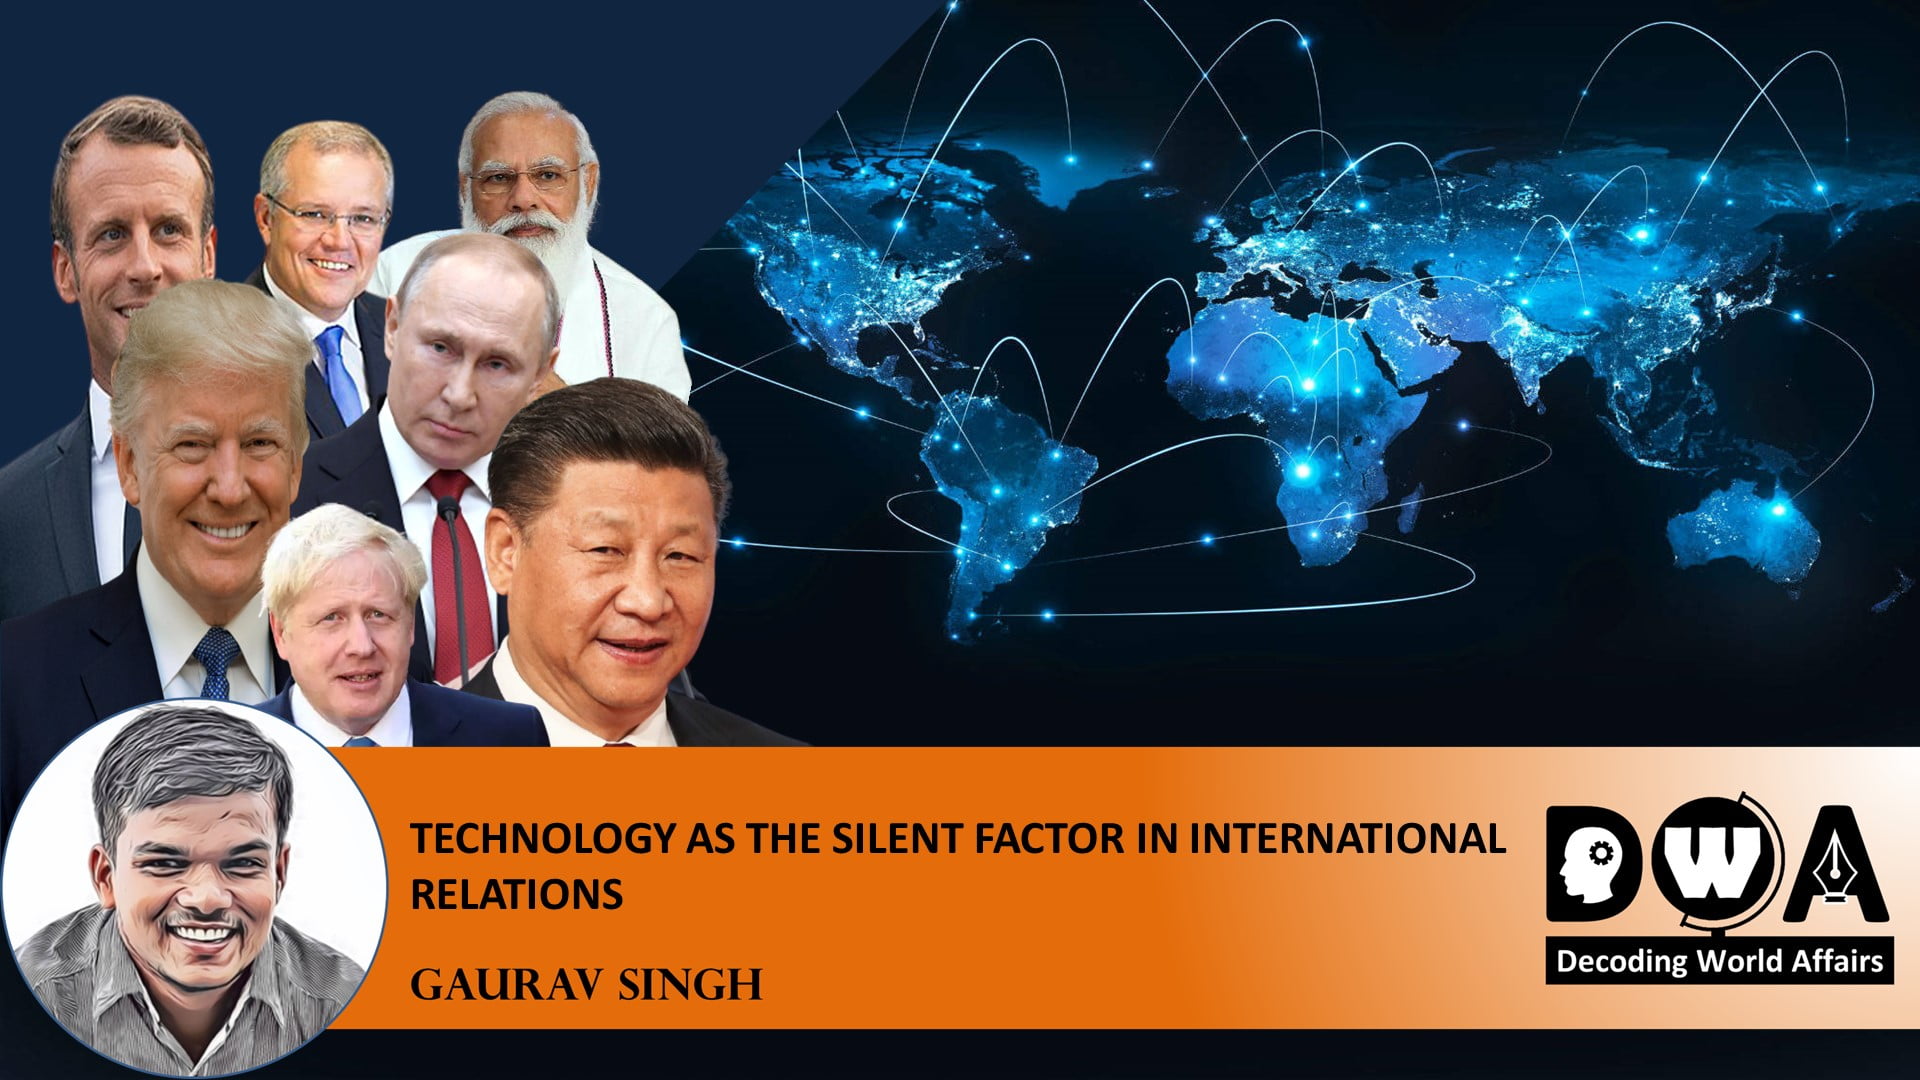 https://decodingworldaffairs.com/technology-as-the-silent-factor-in-international-relations/